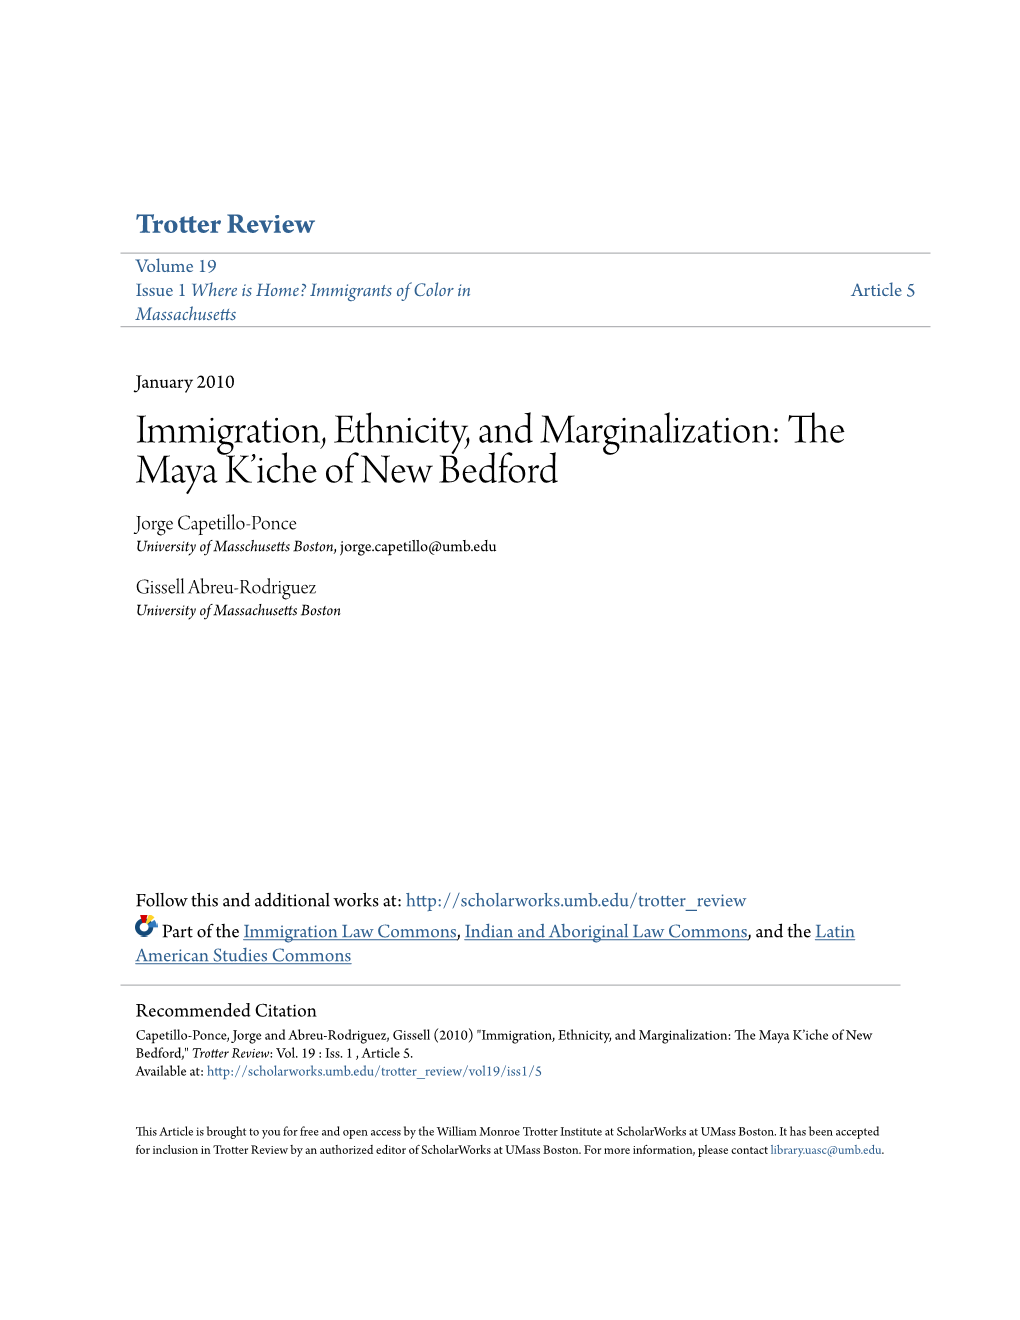 Immigration, Ethnicity, and Marginalization: the Maya Kâ